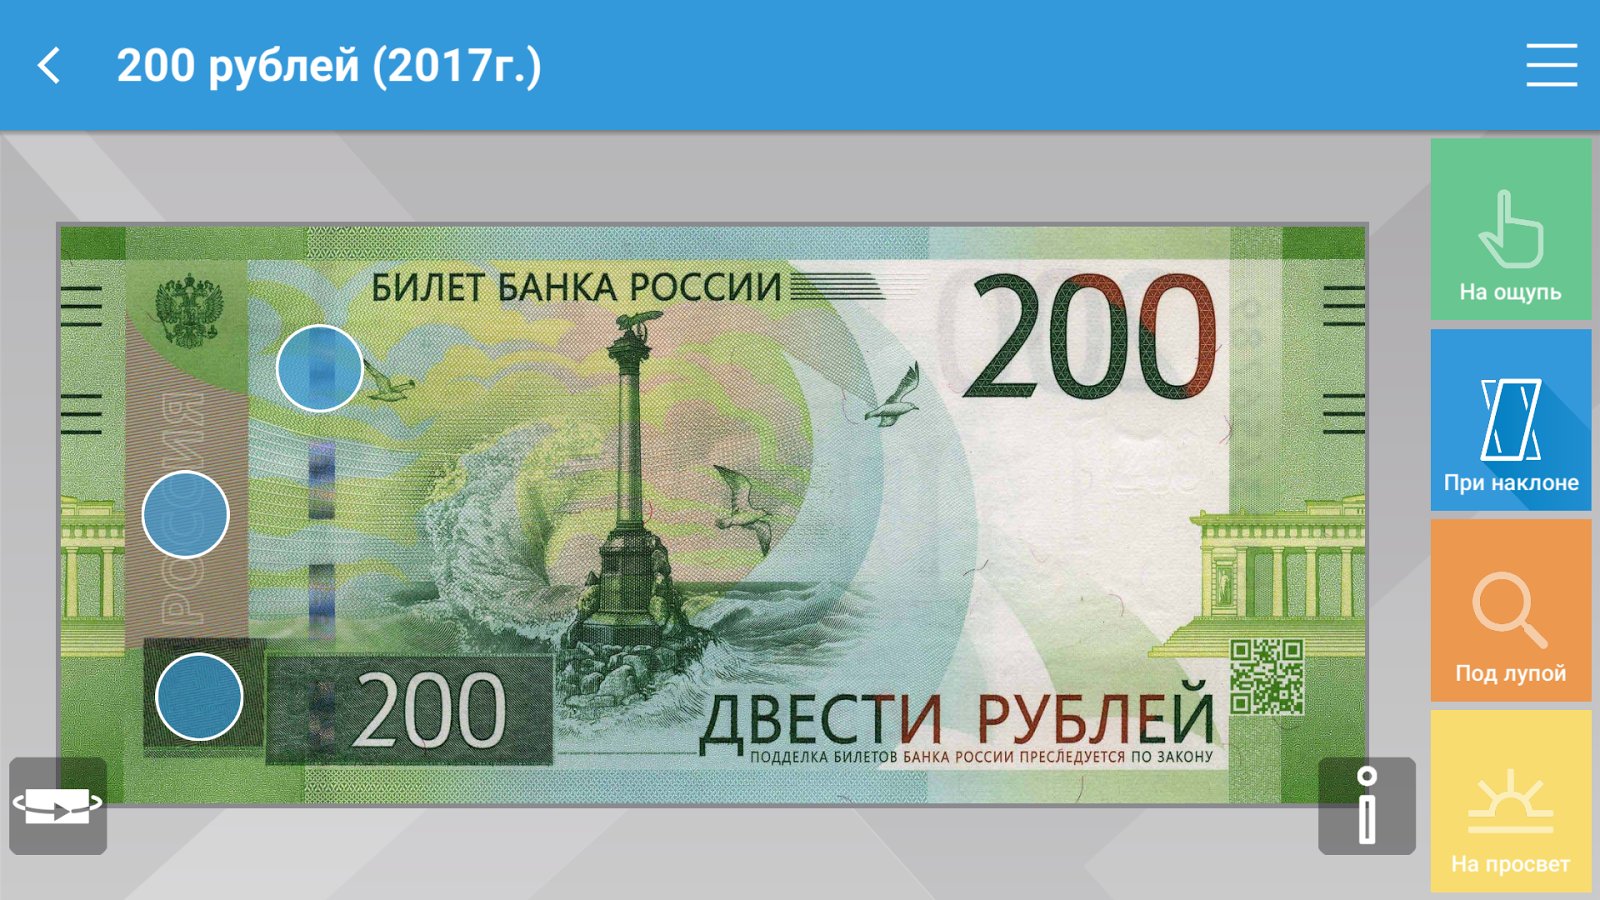 200 рублей срочно. Купюра 200 рублей. 200 Рублей купюра 2017. Двести рублей 2017. 200 Рублей банкнота.